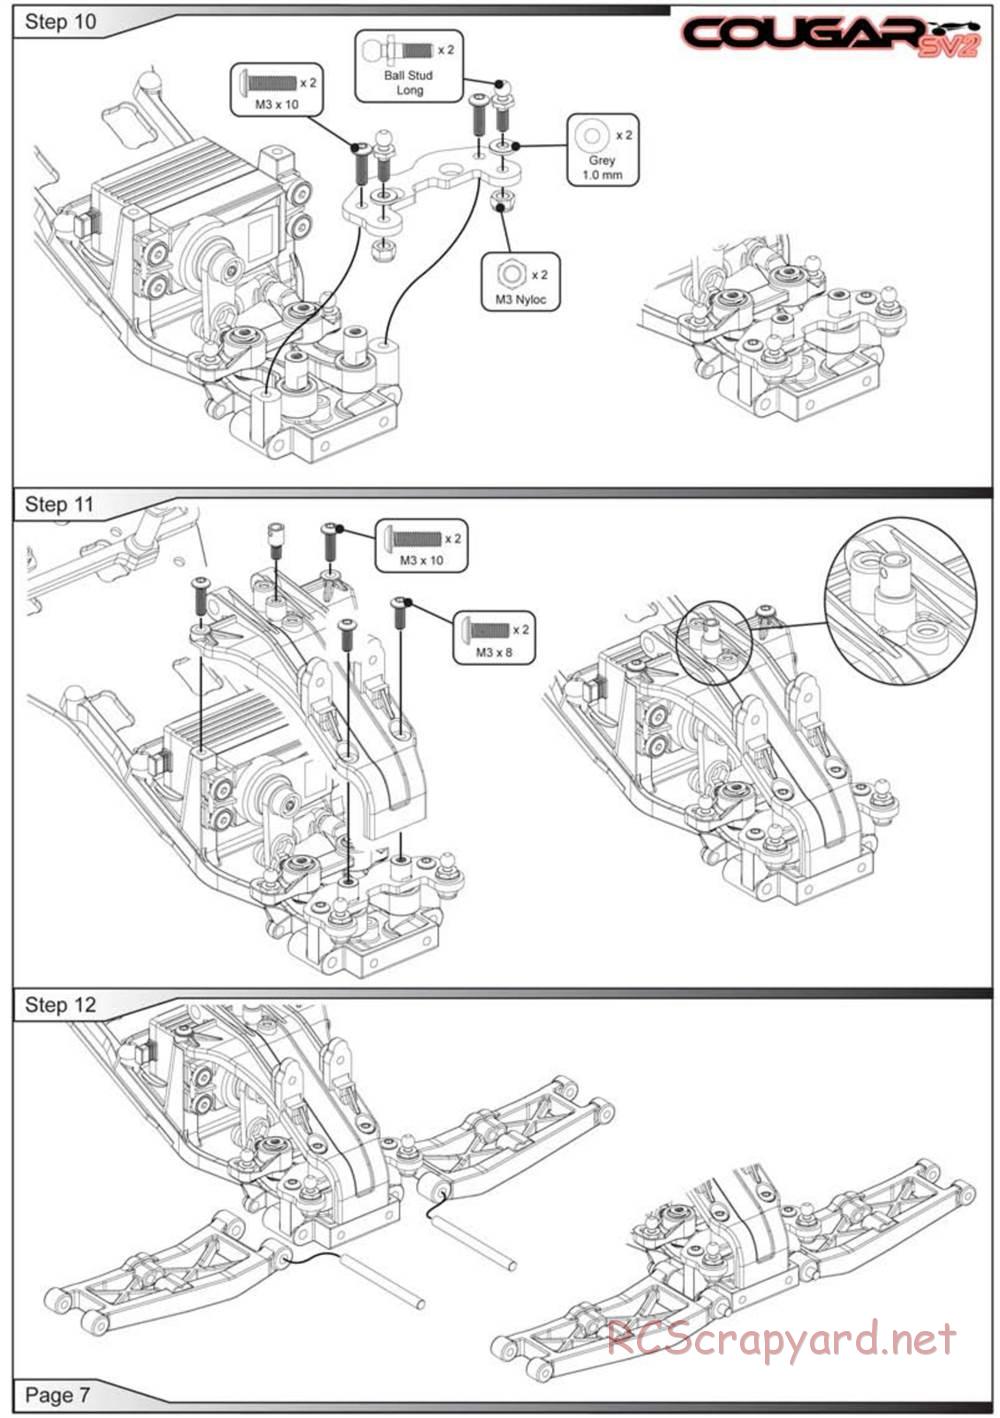 Schumacher - Cougar SV2 - Manual - Page 8